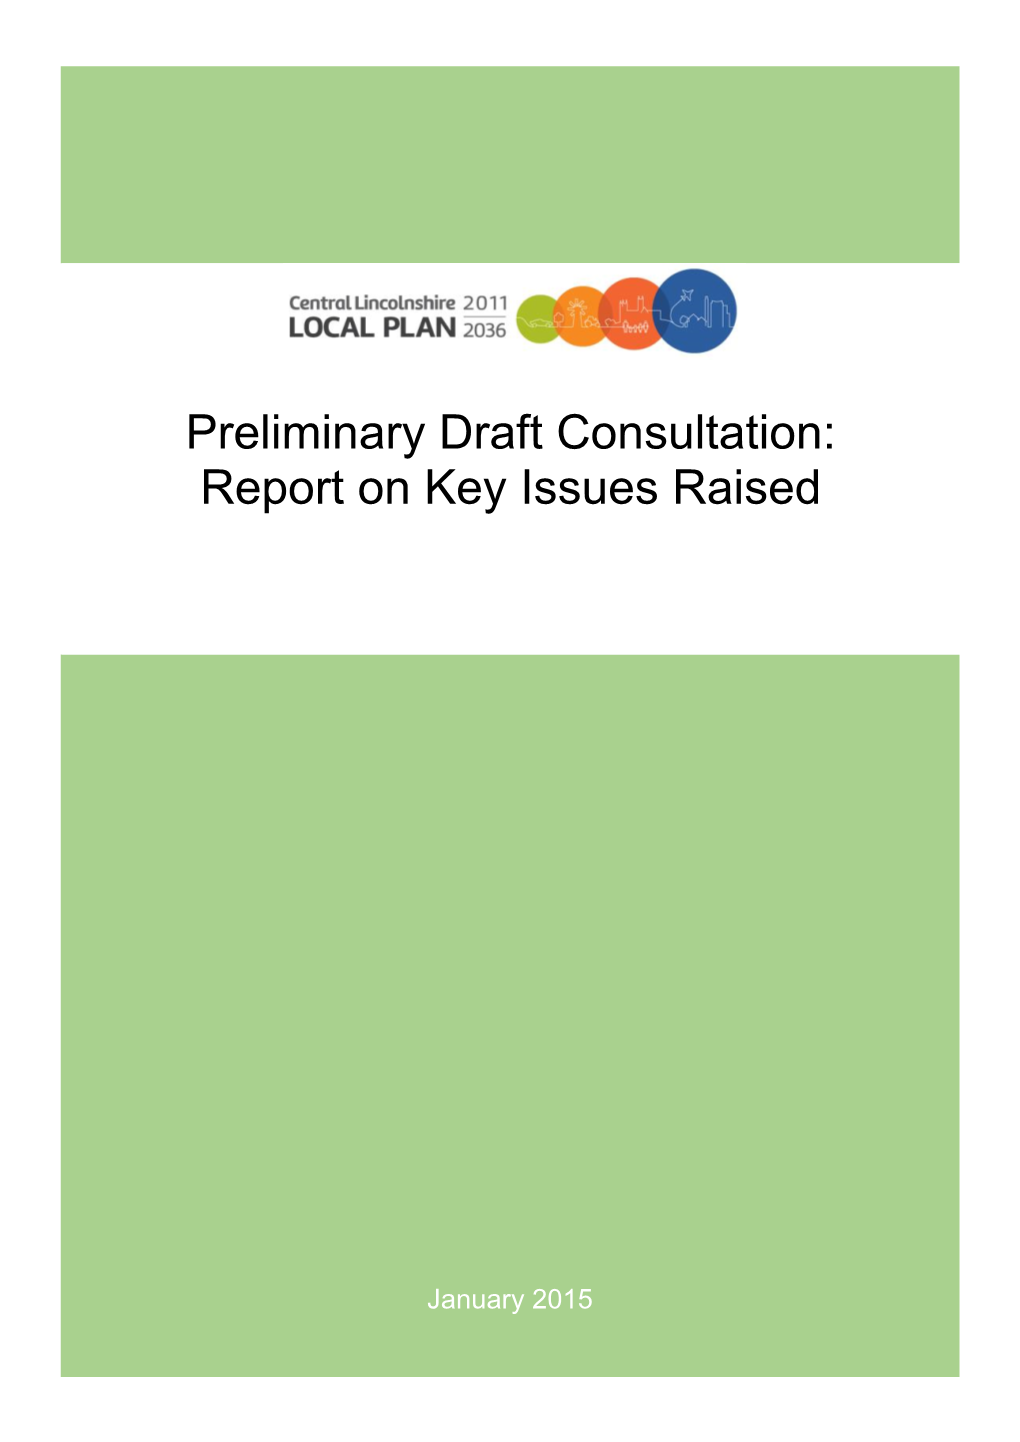 Preliminary Draft Local Plan’) October 2014